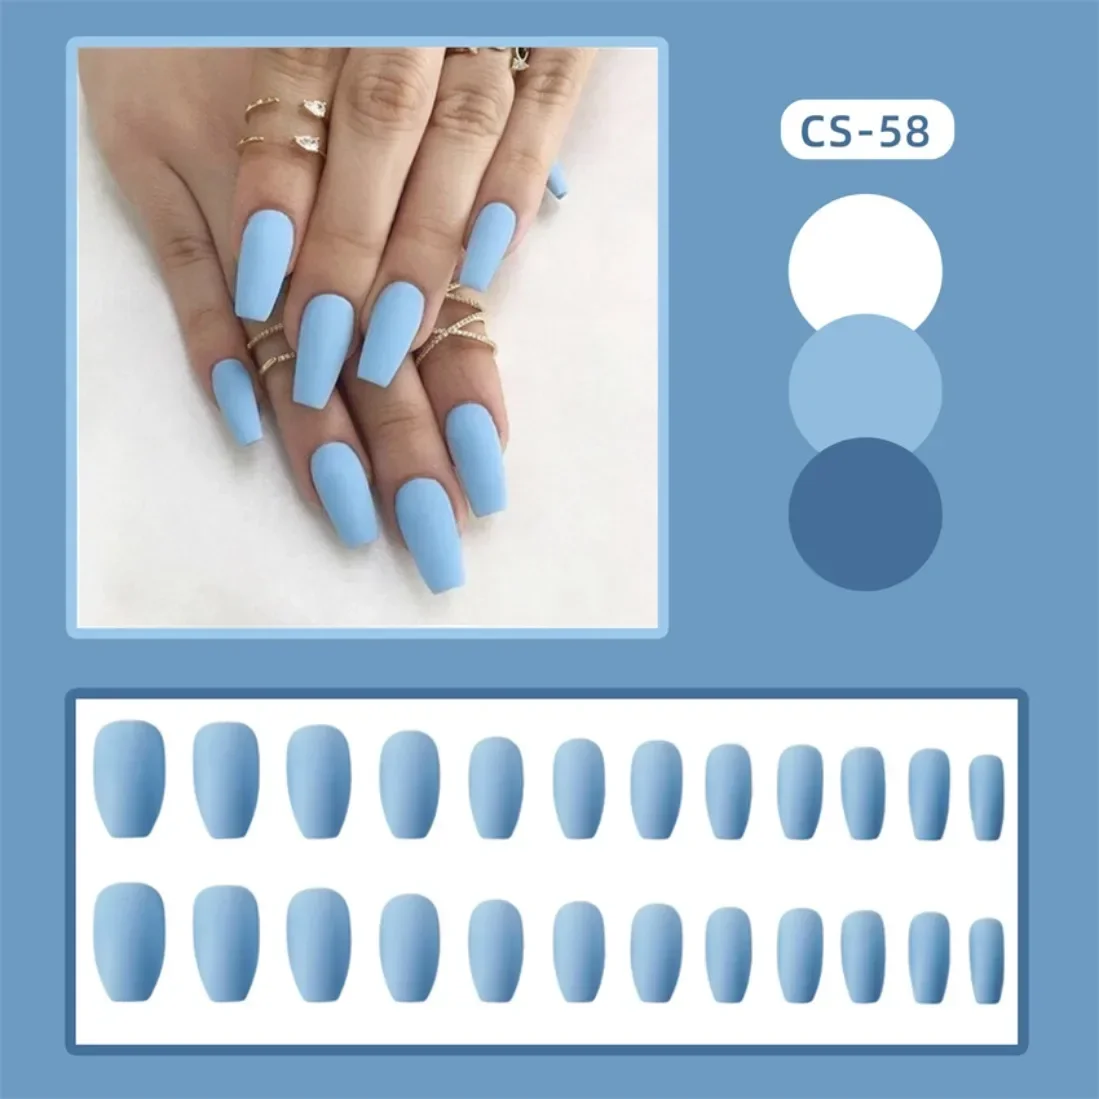 

24pcs Artificial Acrylic Nail Art Fake Nails Full Coverage Removable Press On Nails Medium Length Frosted Blue Nail Art tips set